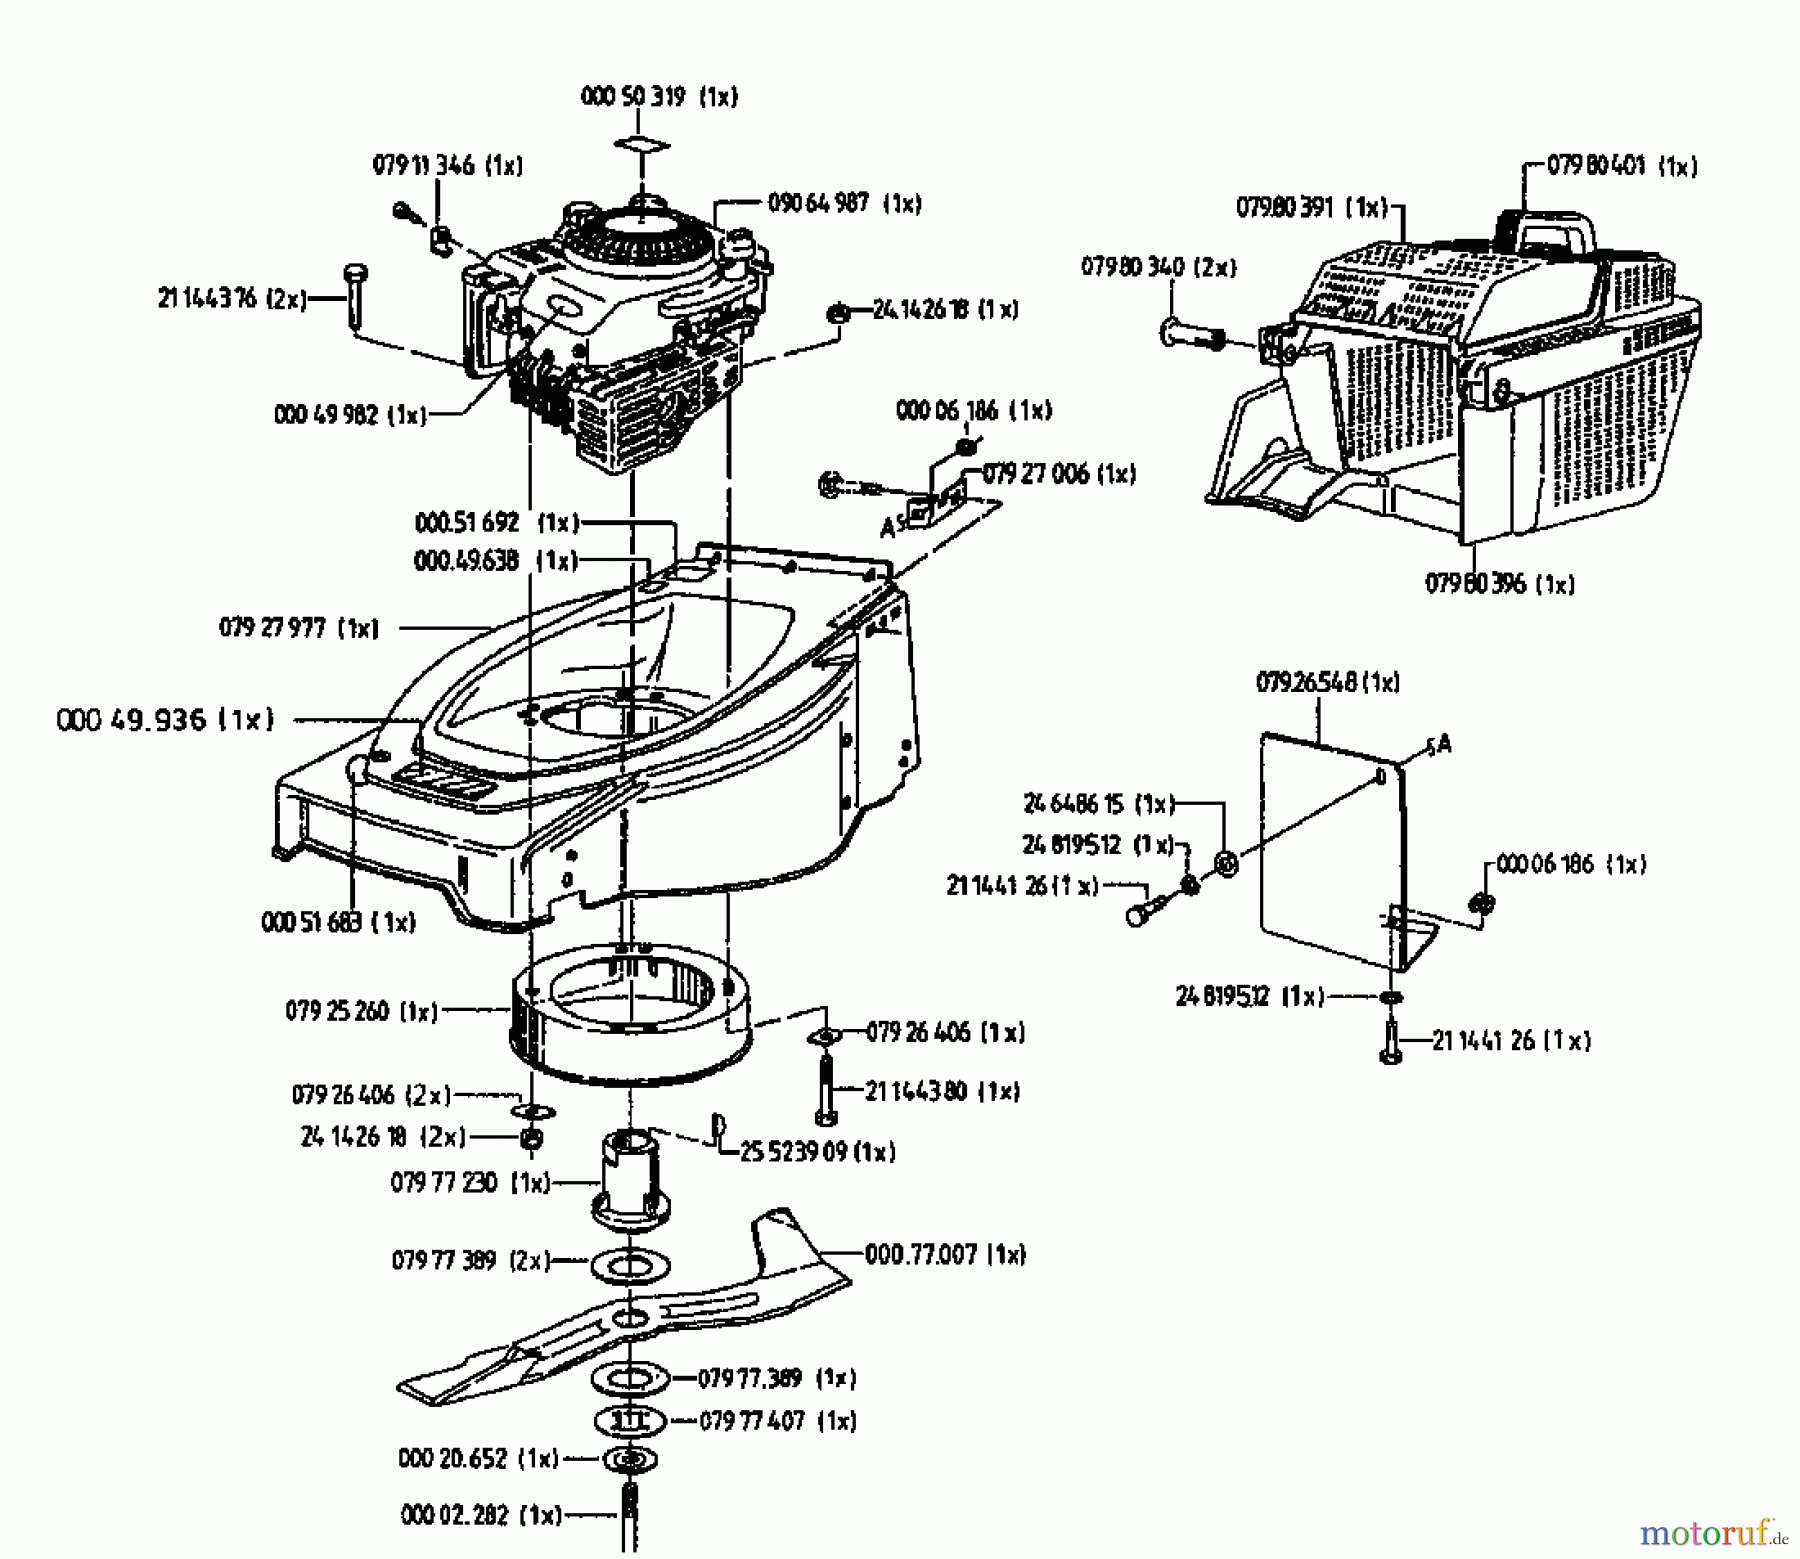  Gutbrod Petrol mower HB 42 L 04028.02  (1996) Basic machine